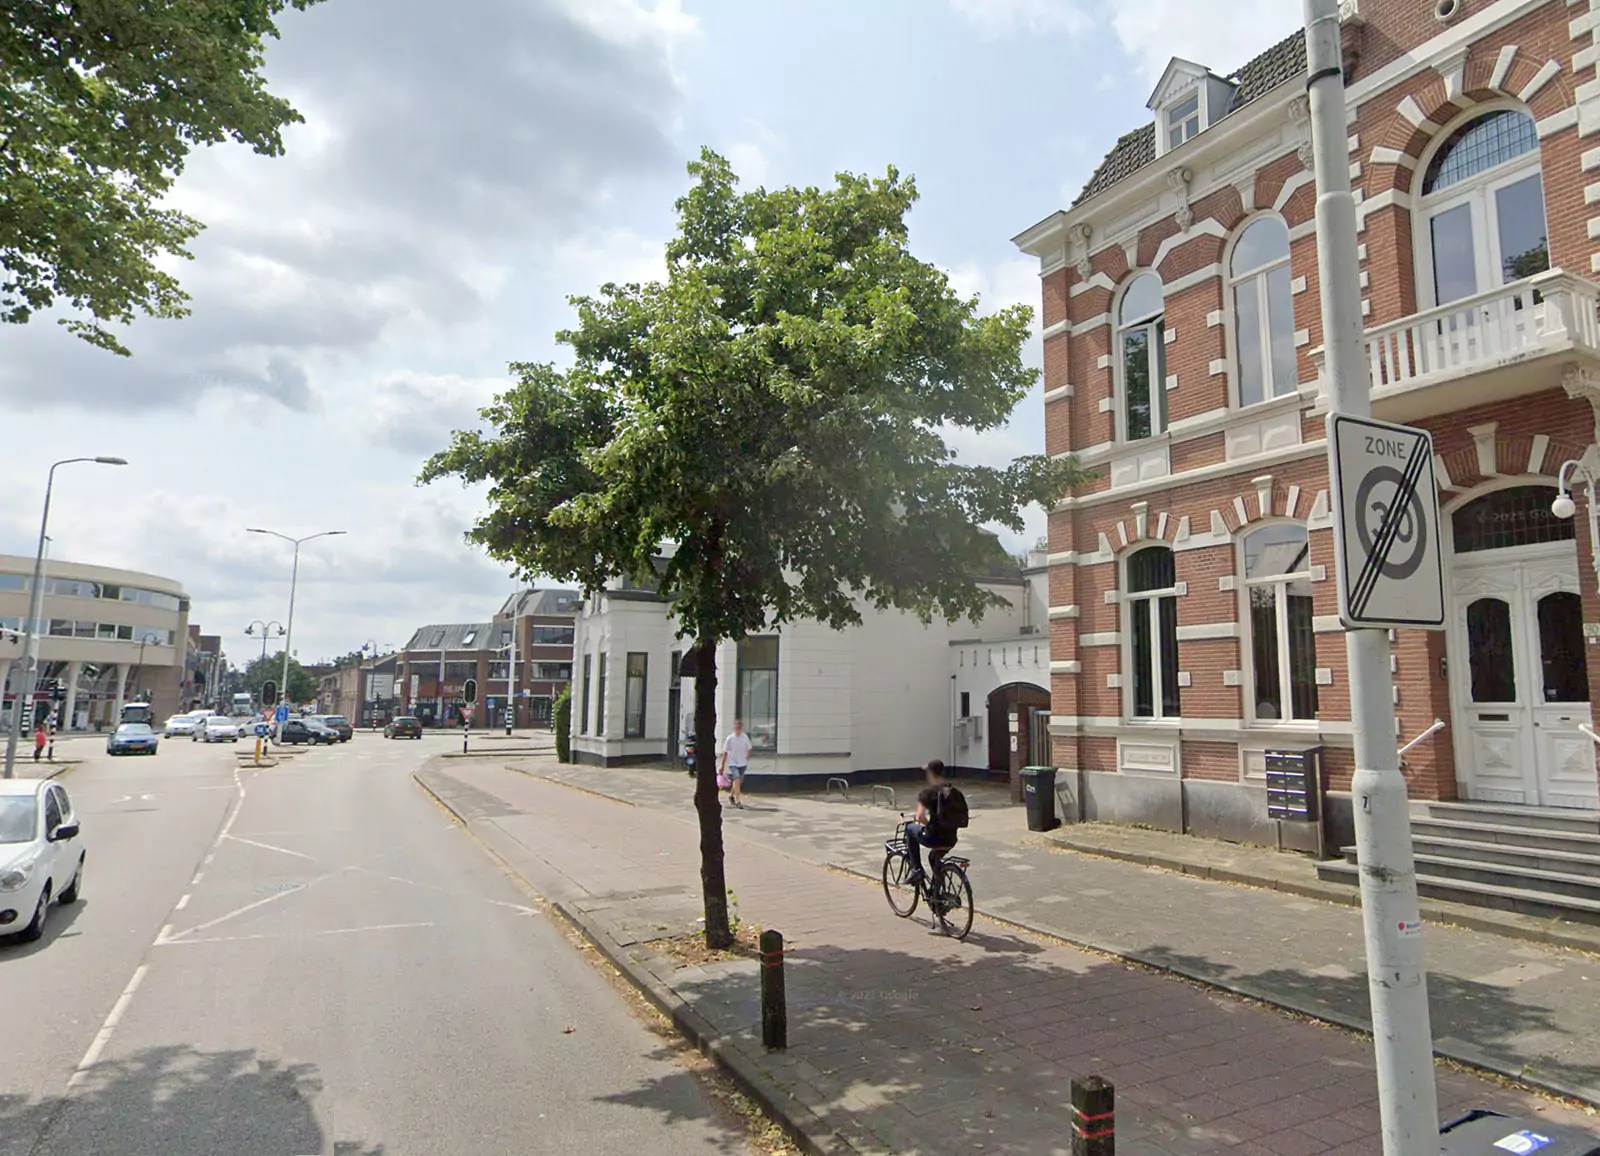 Vestiging Hypotheek House Eindhoven - Hypotheekadvies Eindhoven